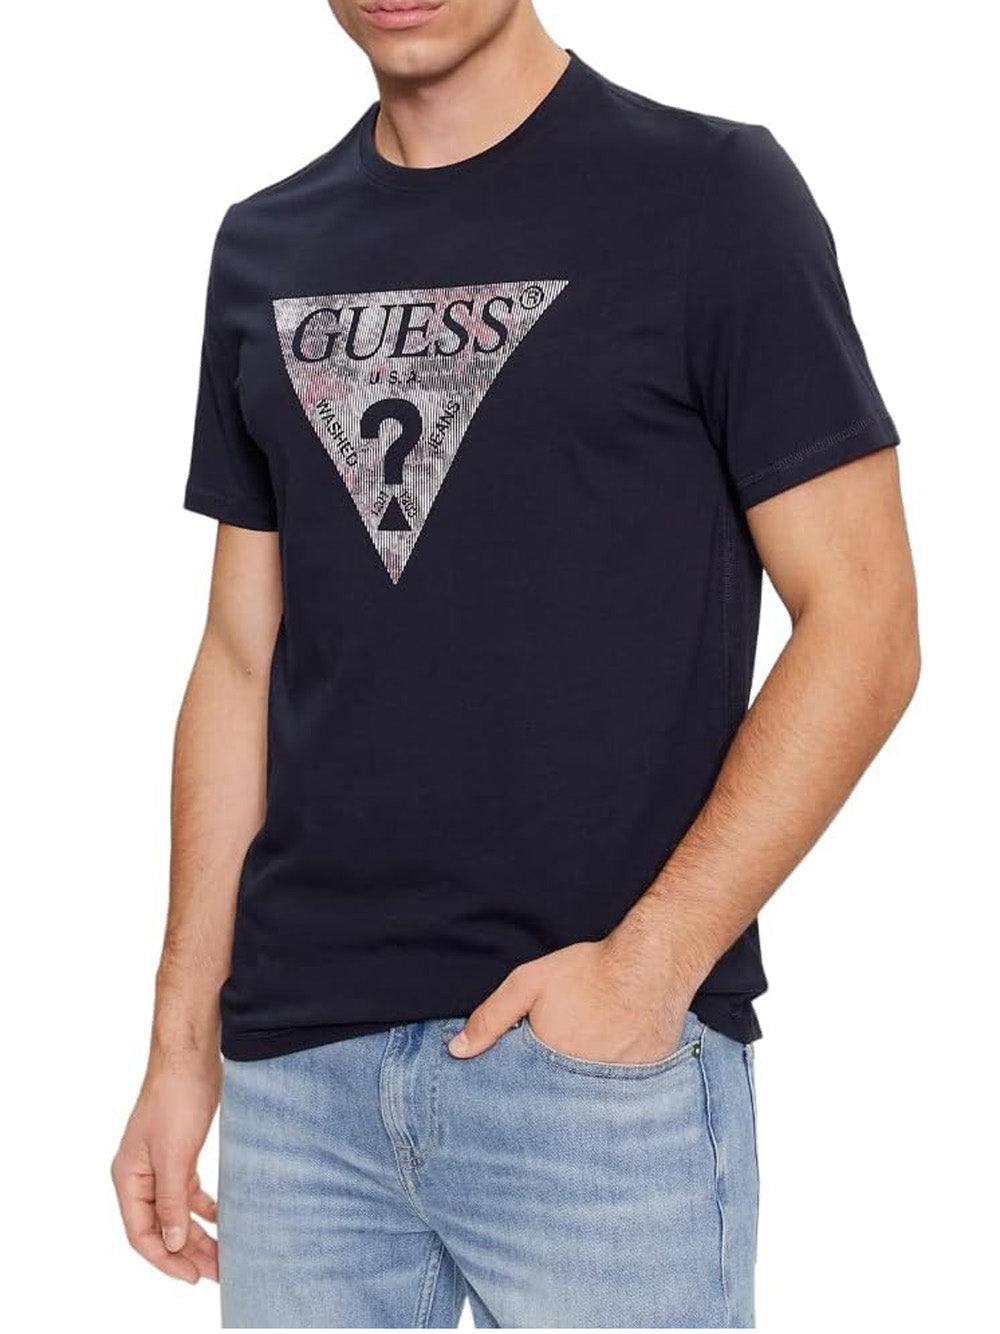 GUESS T-shirt Uomo - Blu modello M4RI29J1314